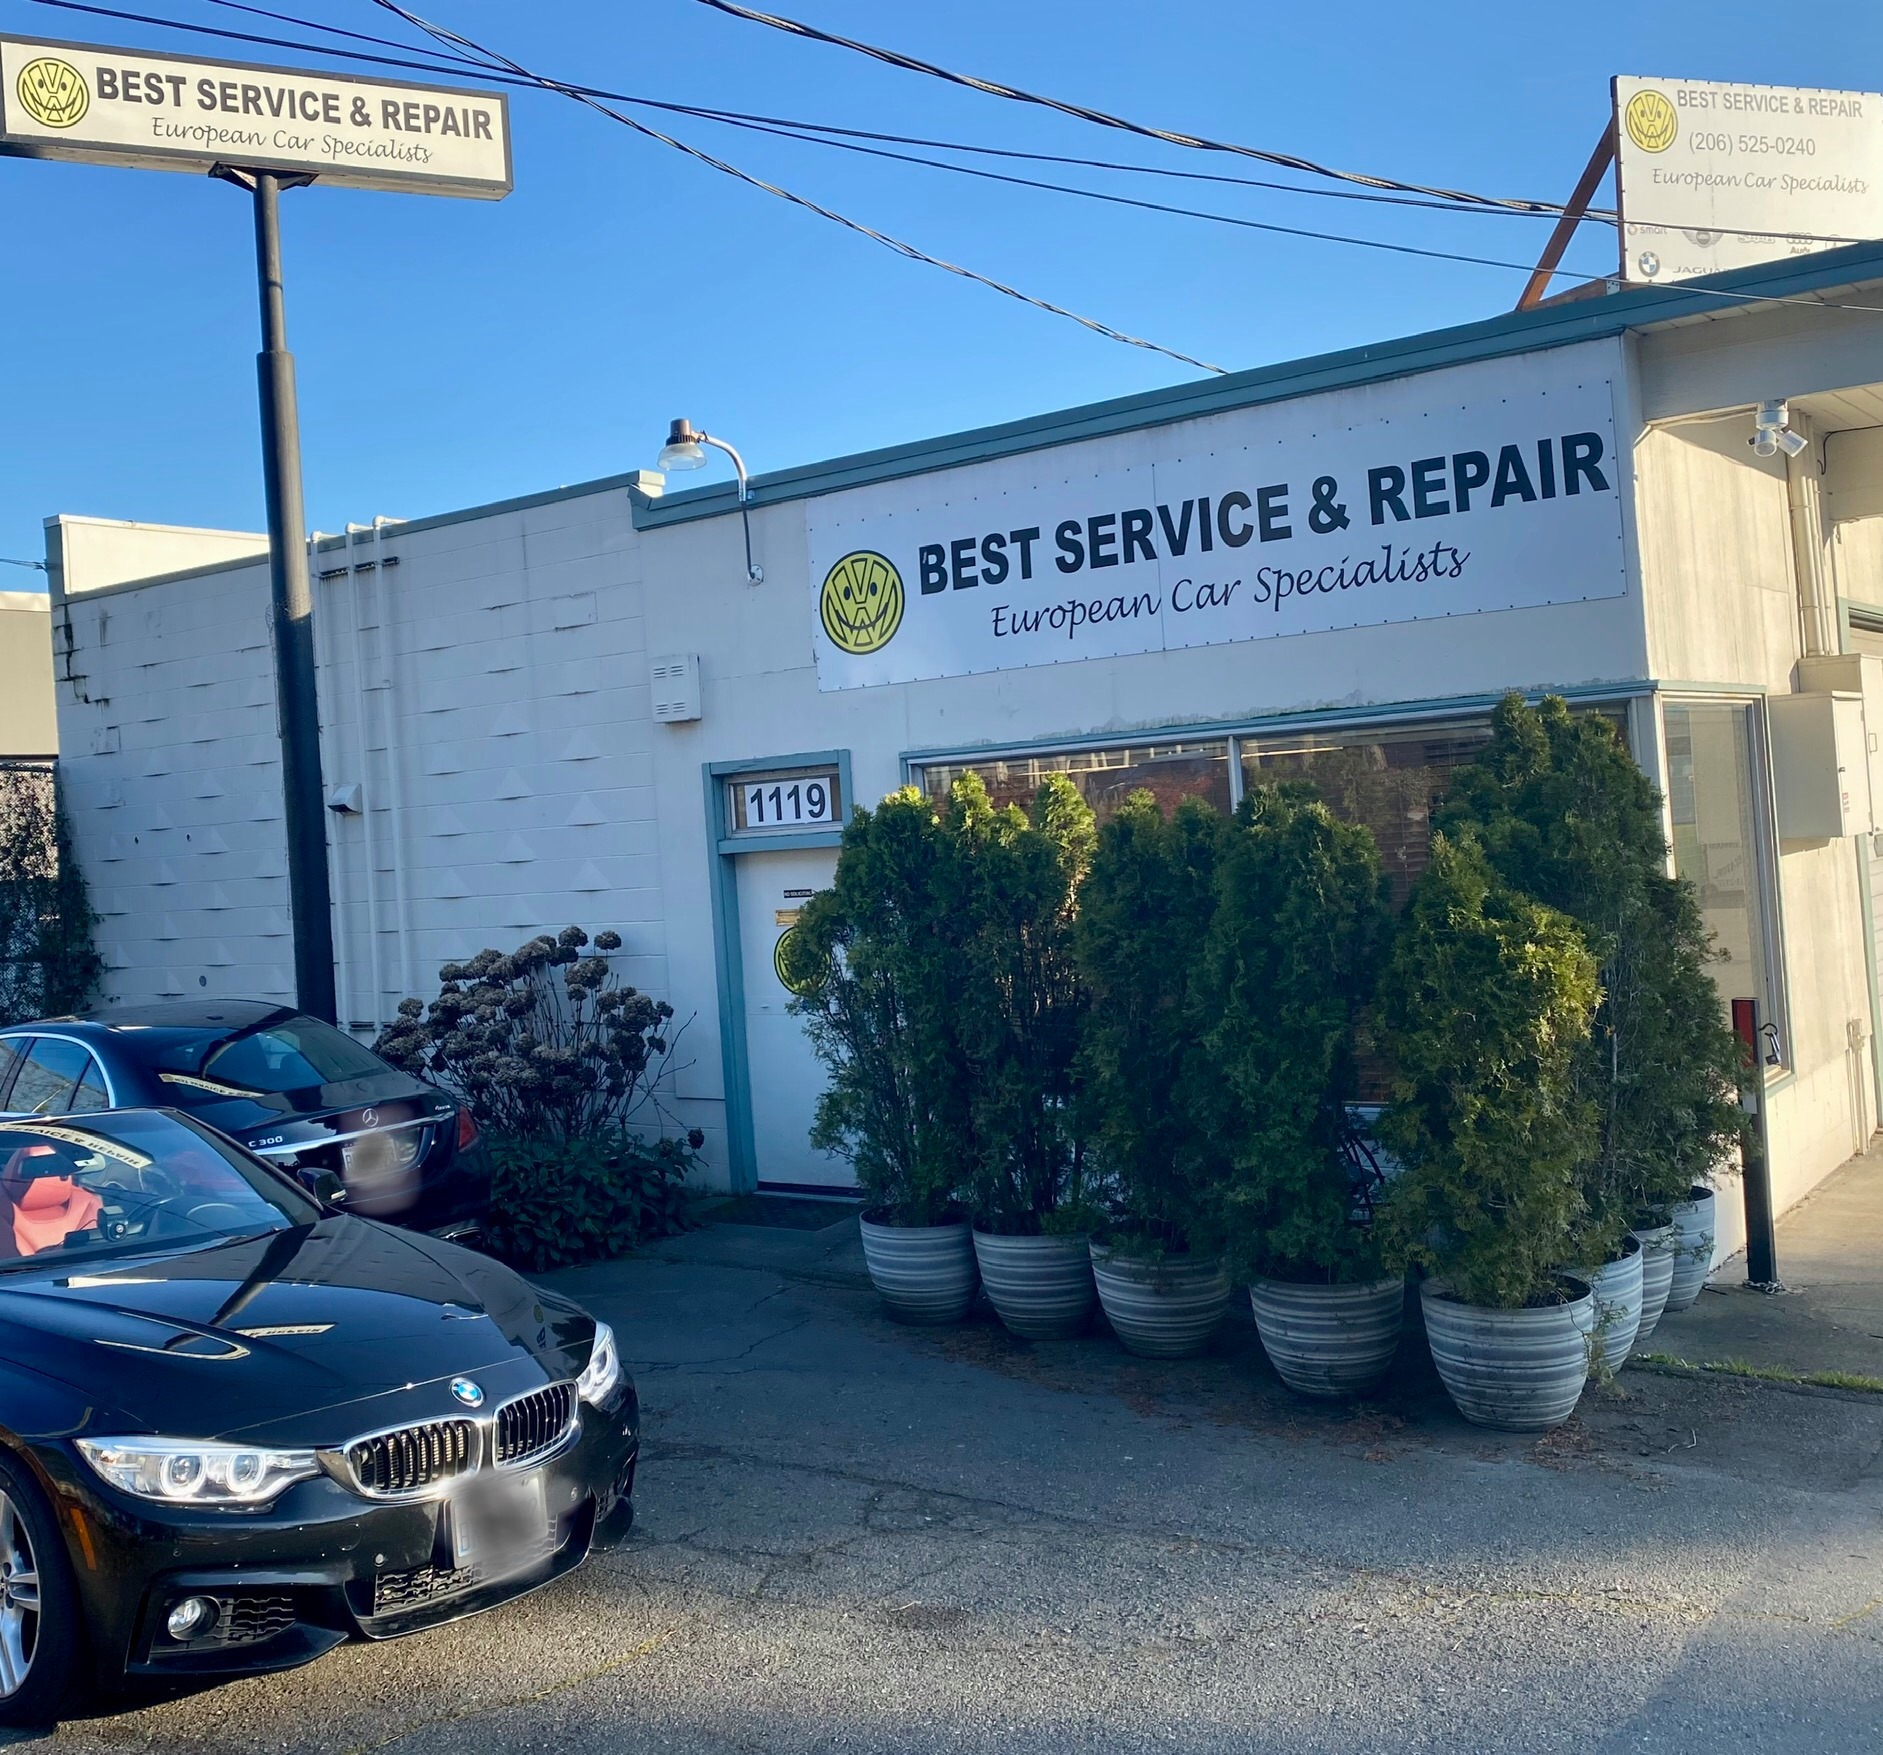 Best Service & Repair